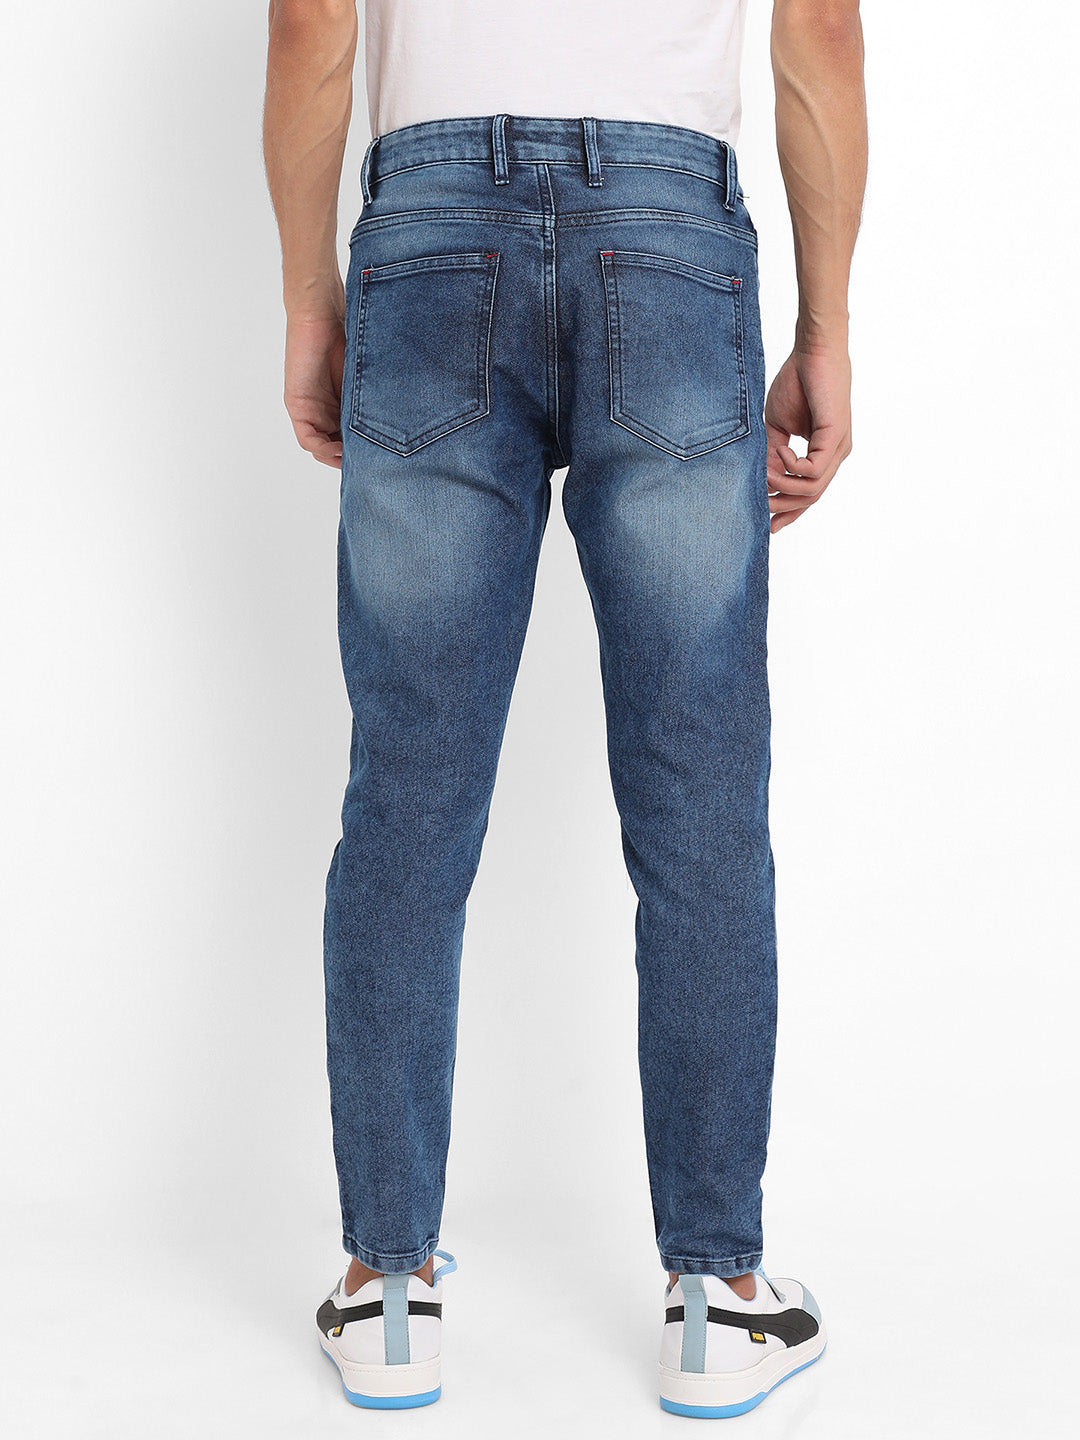 Distressed Patterned Denim Jeans